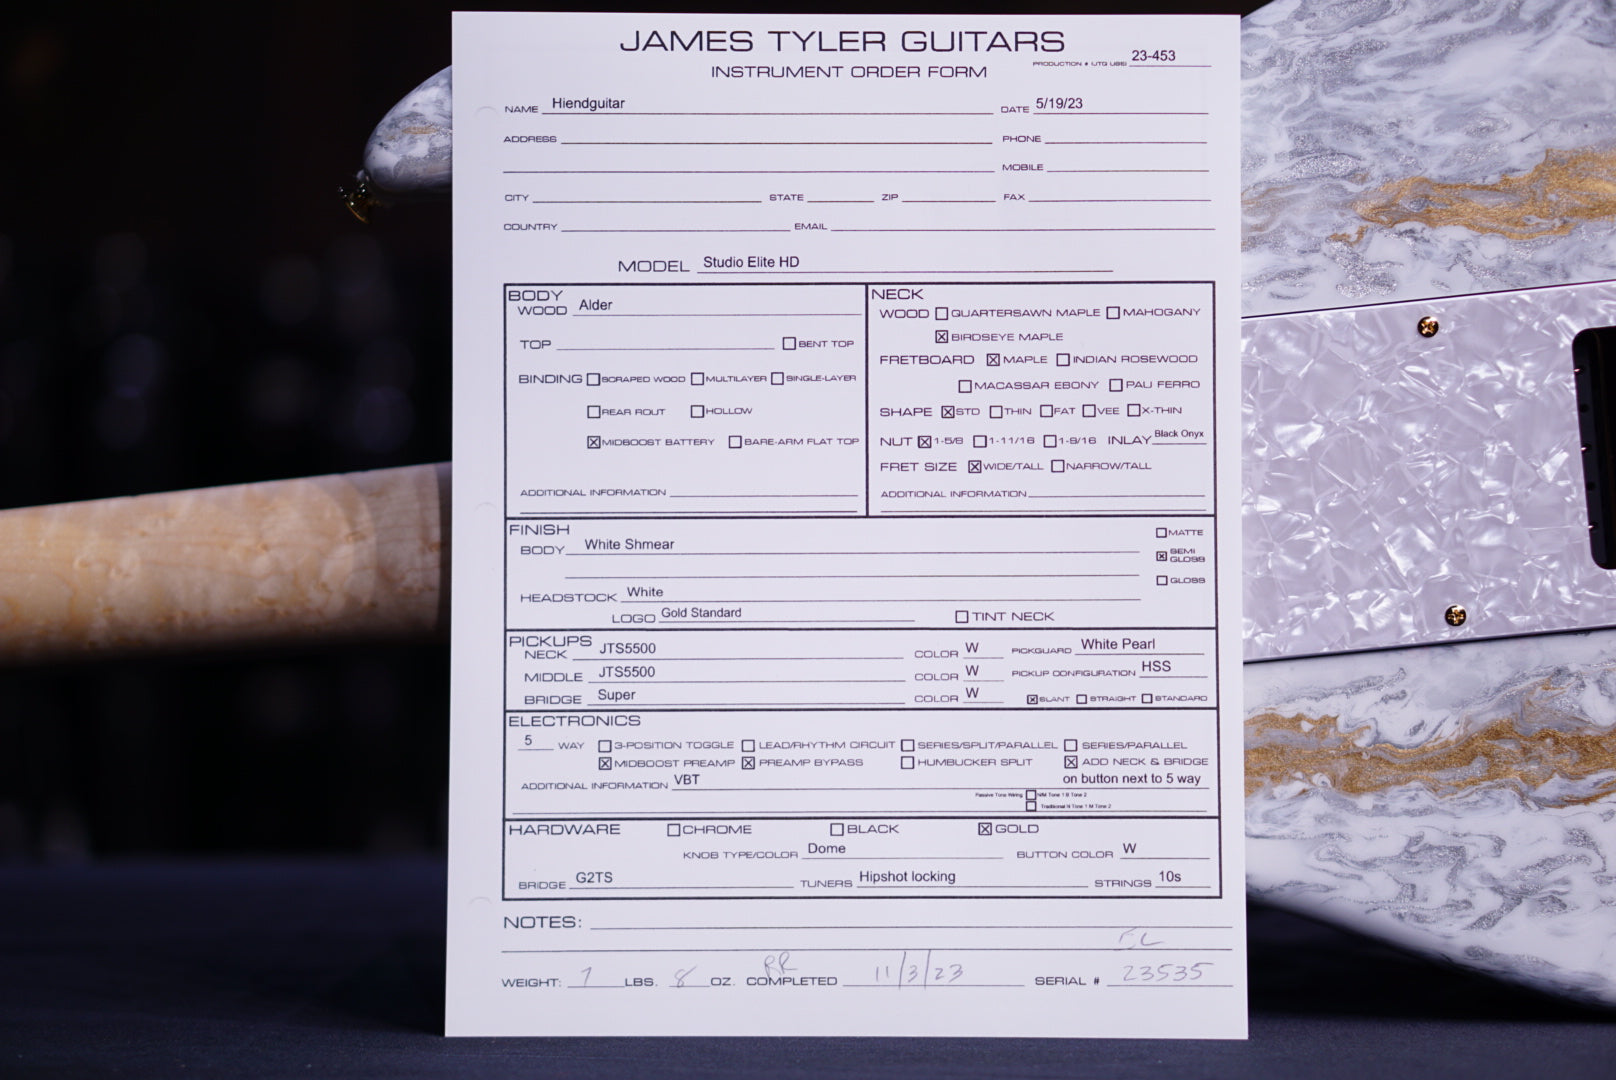 James Tyler Studio Elite HD White Shmear finish  birdseye neck23540 - HIENDGUITAR   James Tyler GUITAR